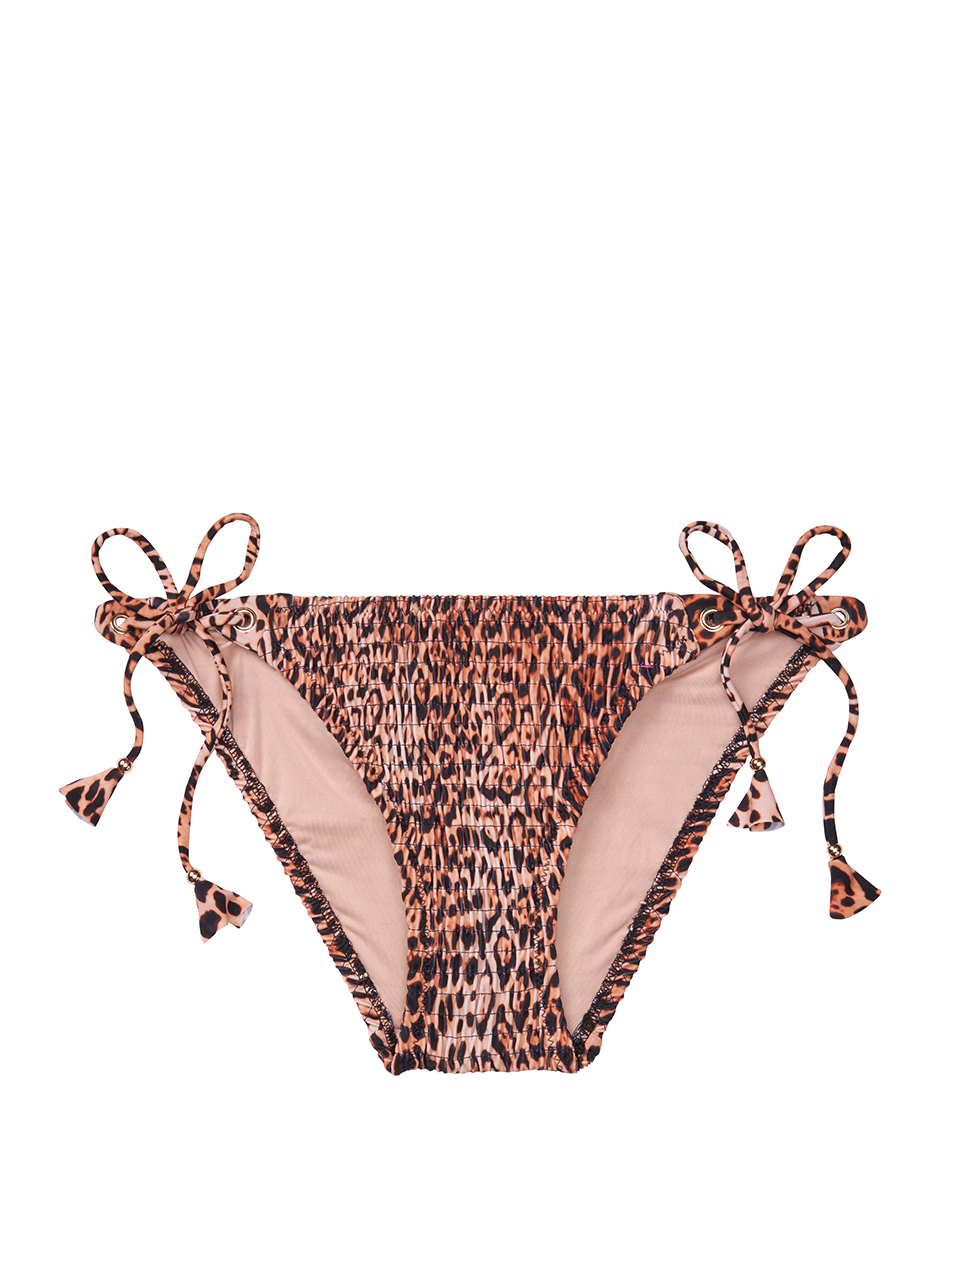 Victoria’s Secret Alona Smocked String Bikini Bottom